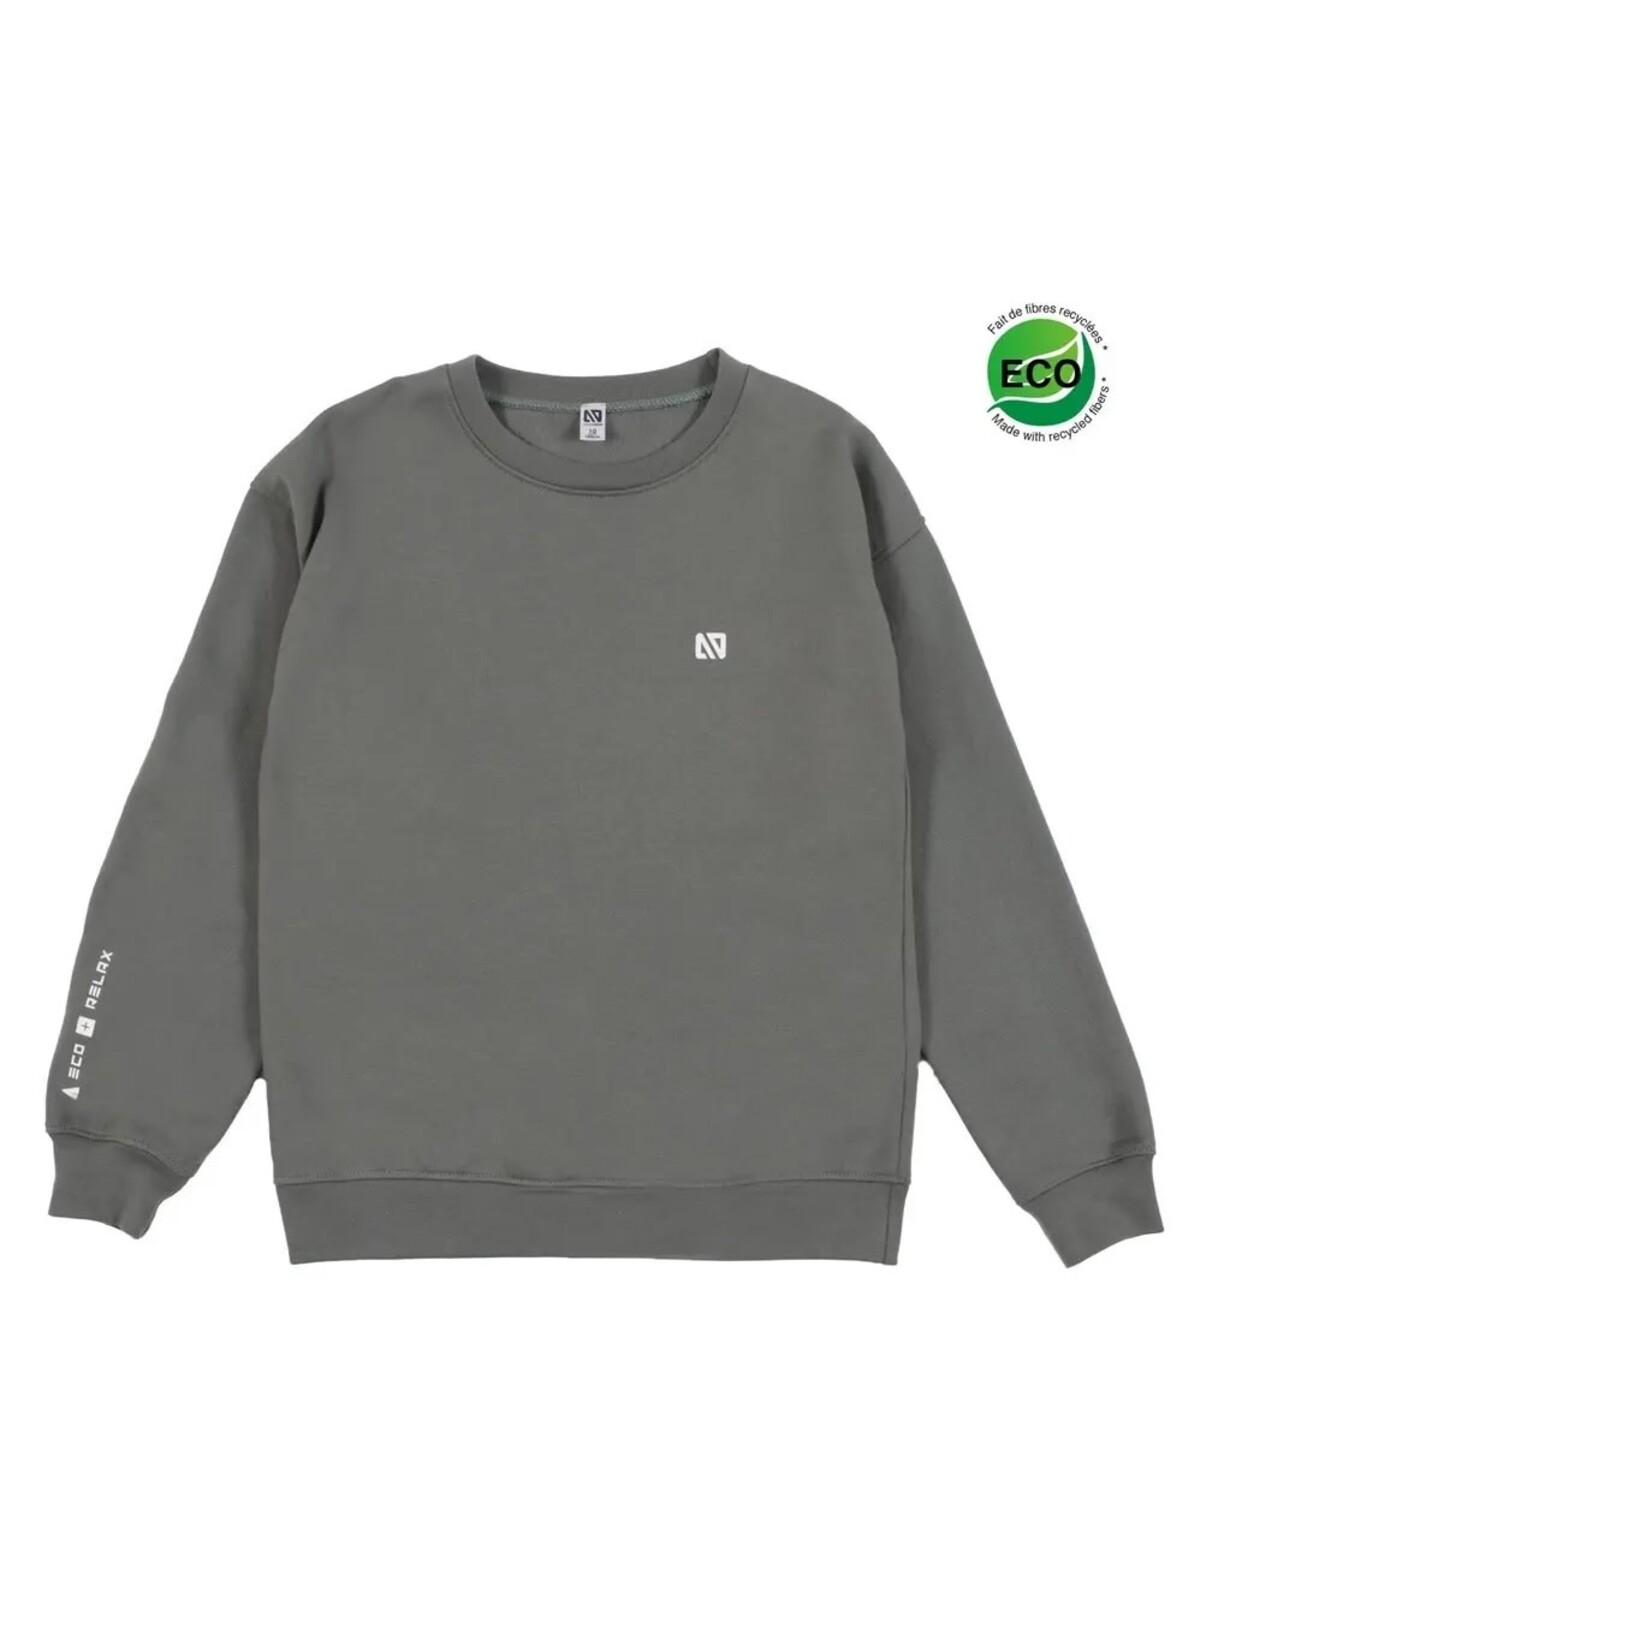 Nanö NANÖ - Chandail coton ouaté uni gris vert Eco Relax 'Loungewear'